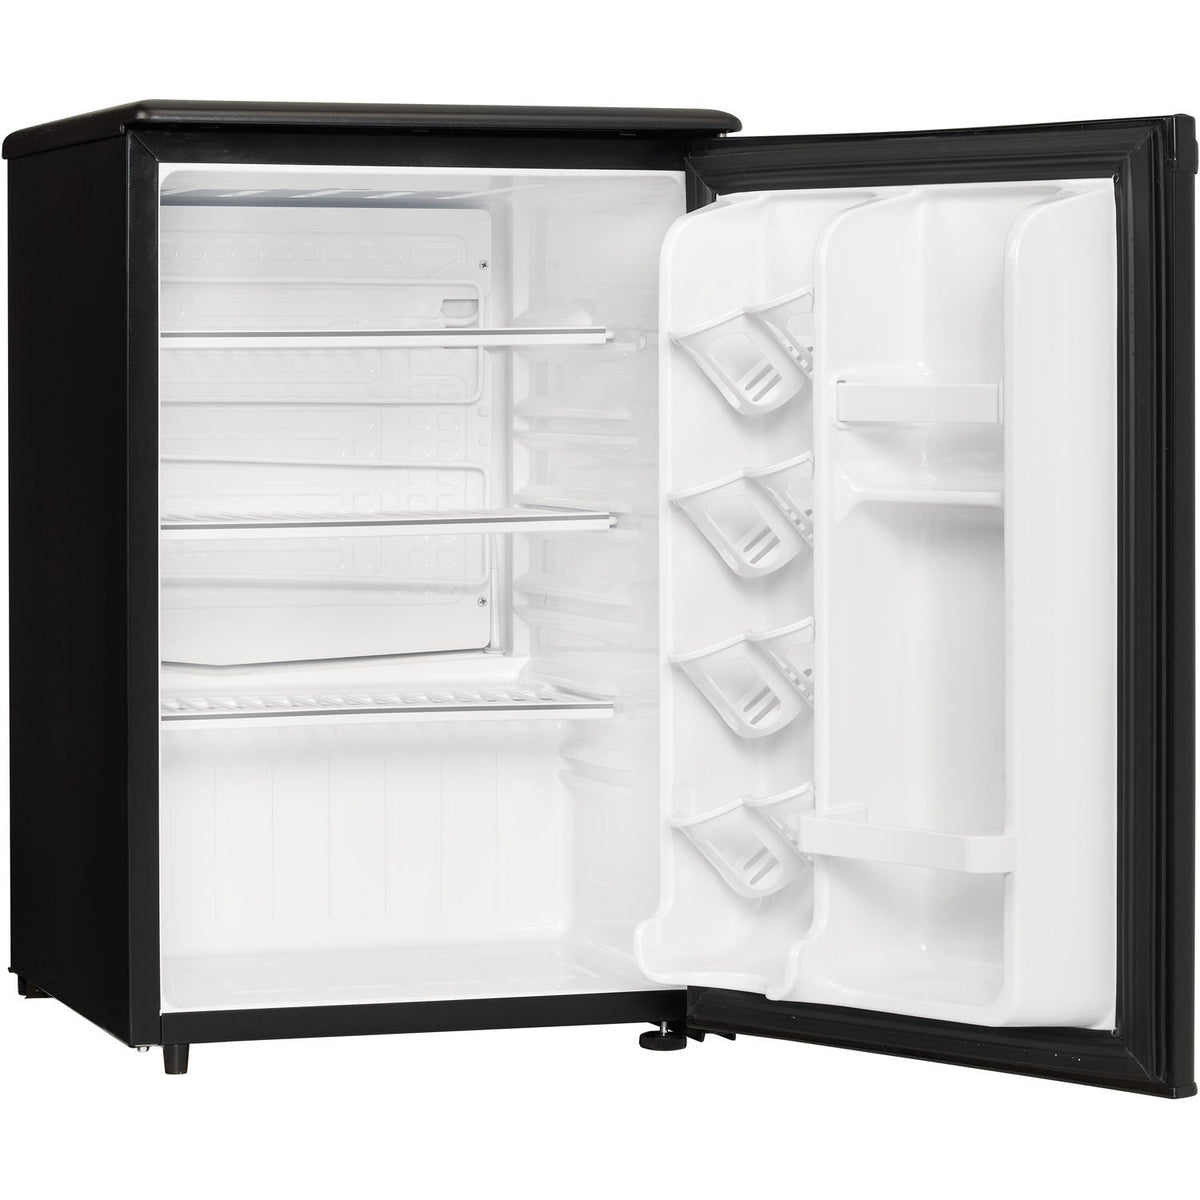 Danby DAR026A1BDD Compact All Refrigerator, 2.6 cu. ft., Black